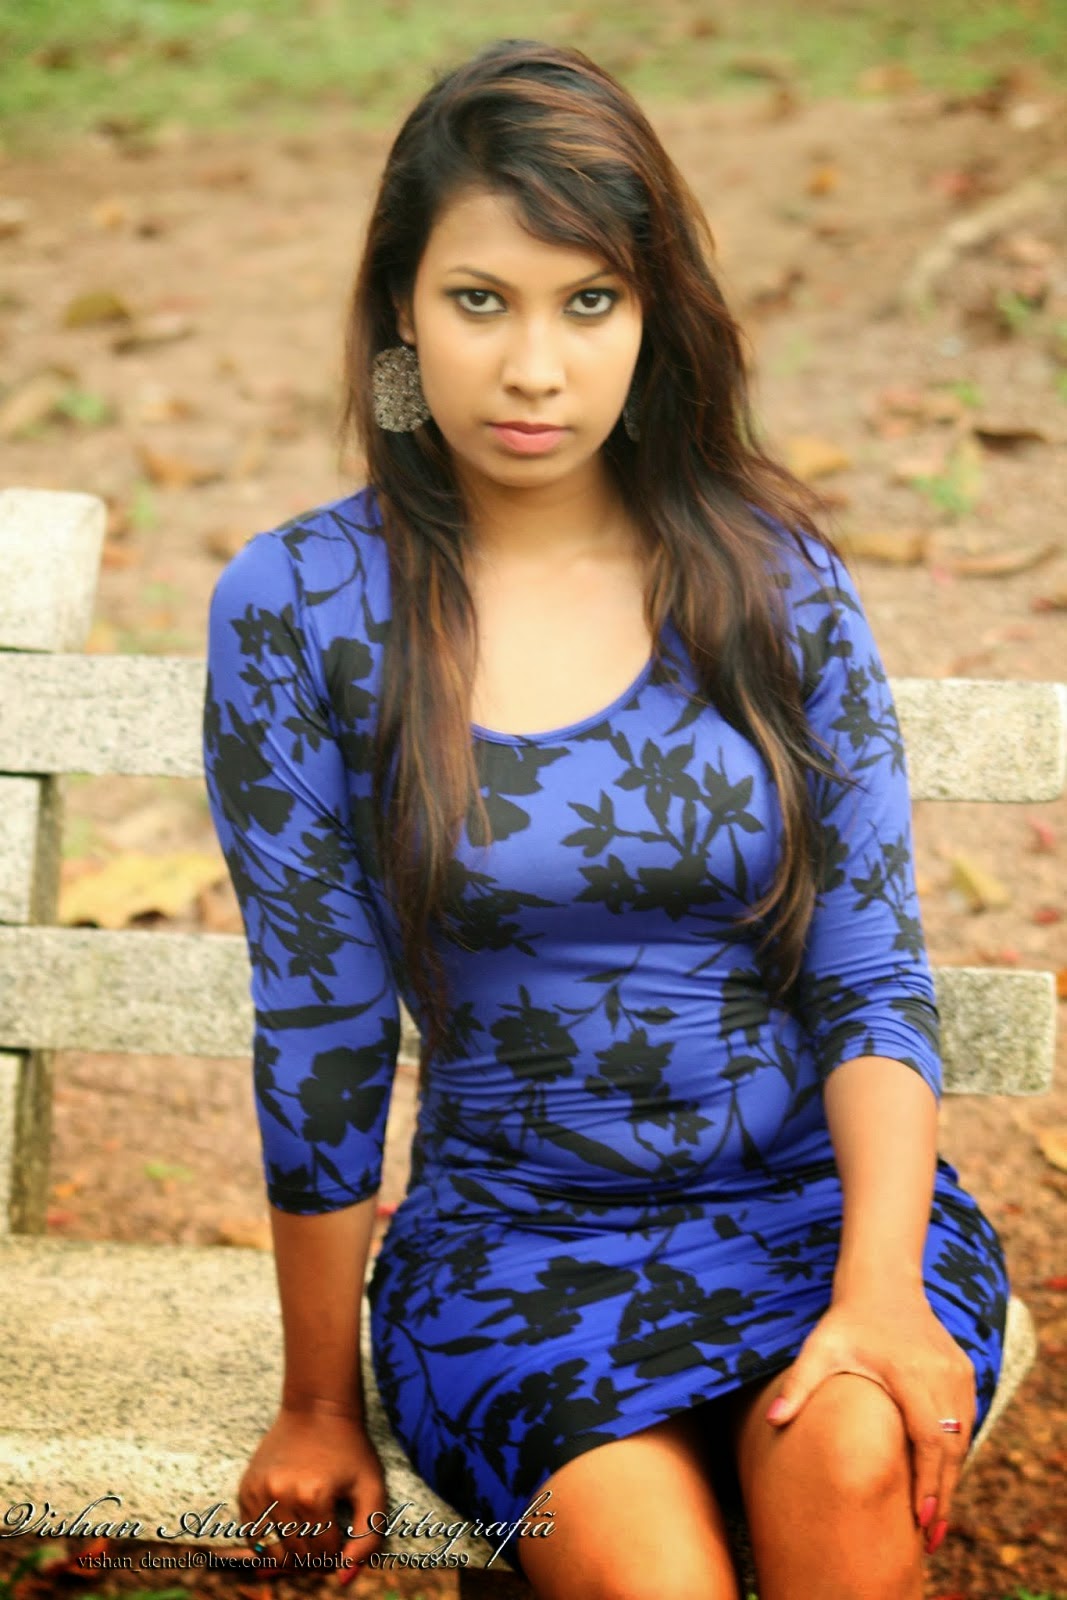 Jayani Alahapperuma - Sri Lankan Actress And Models